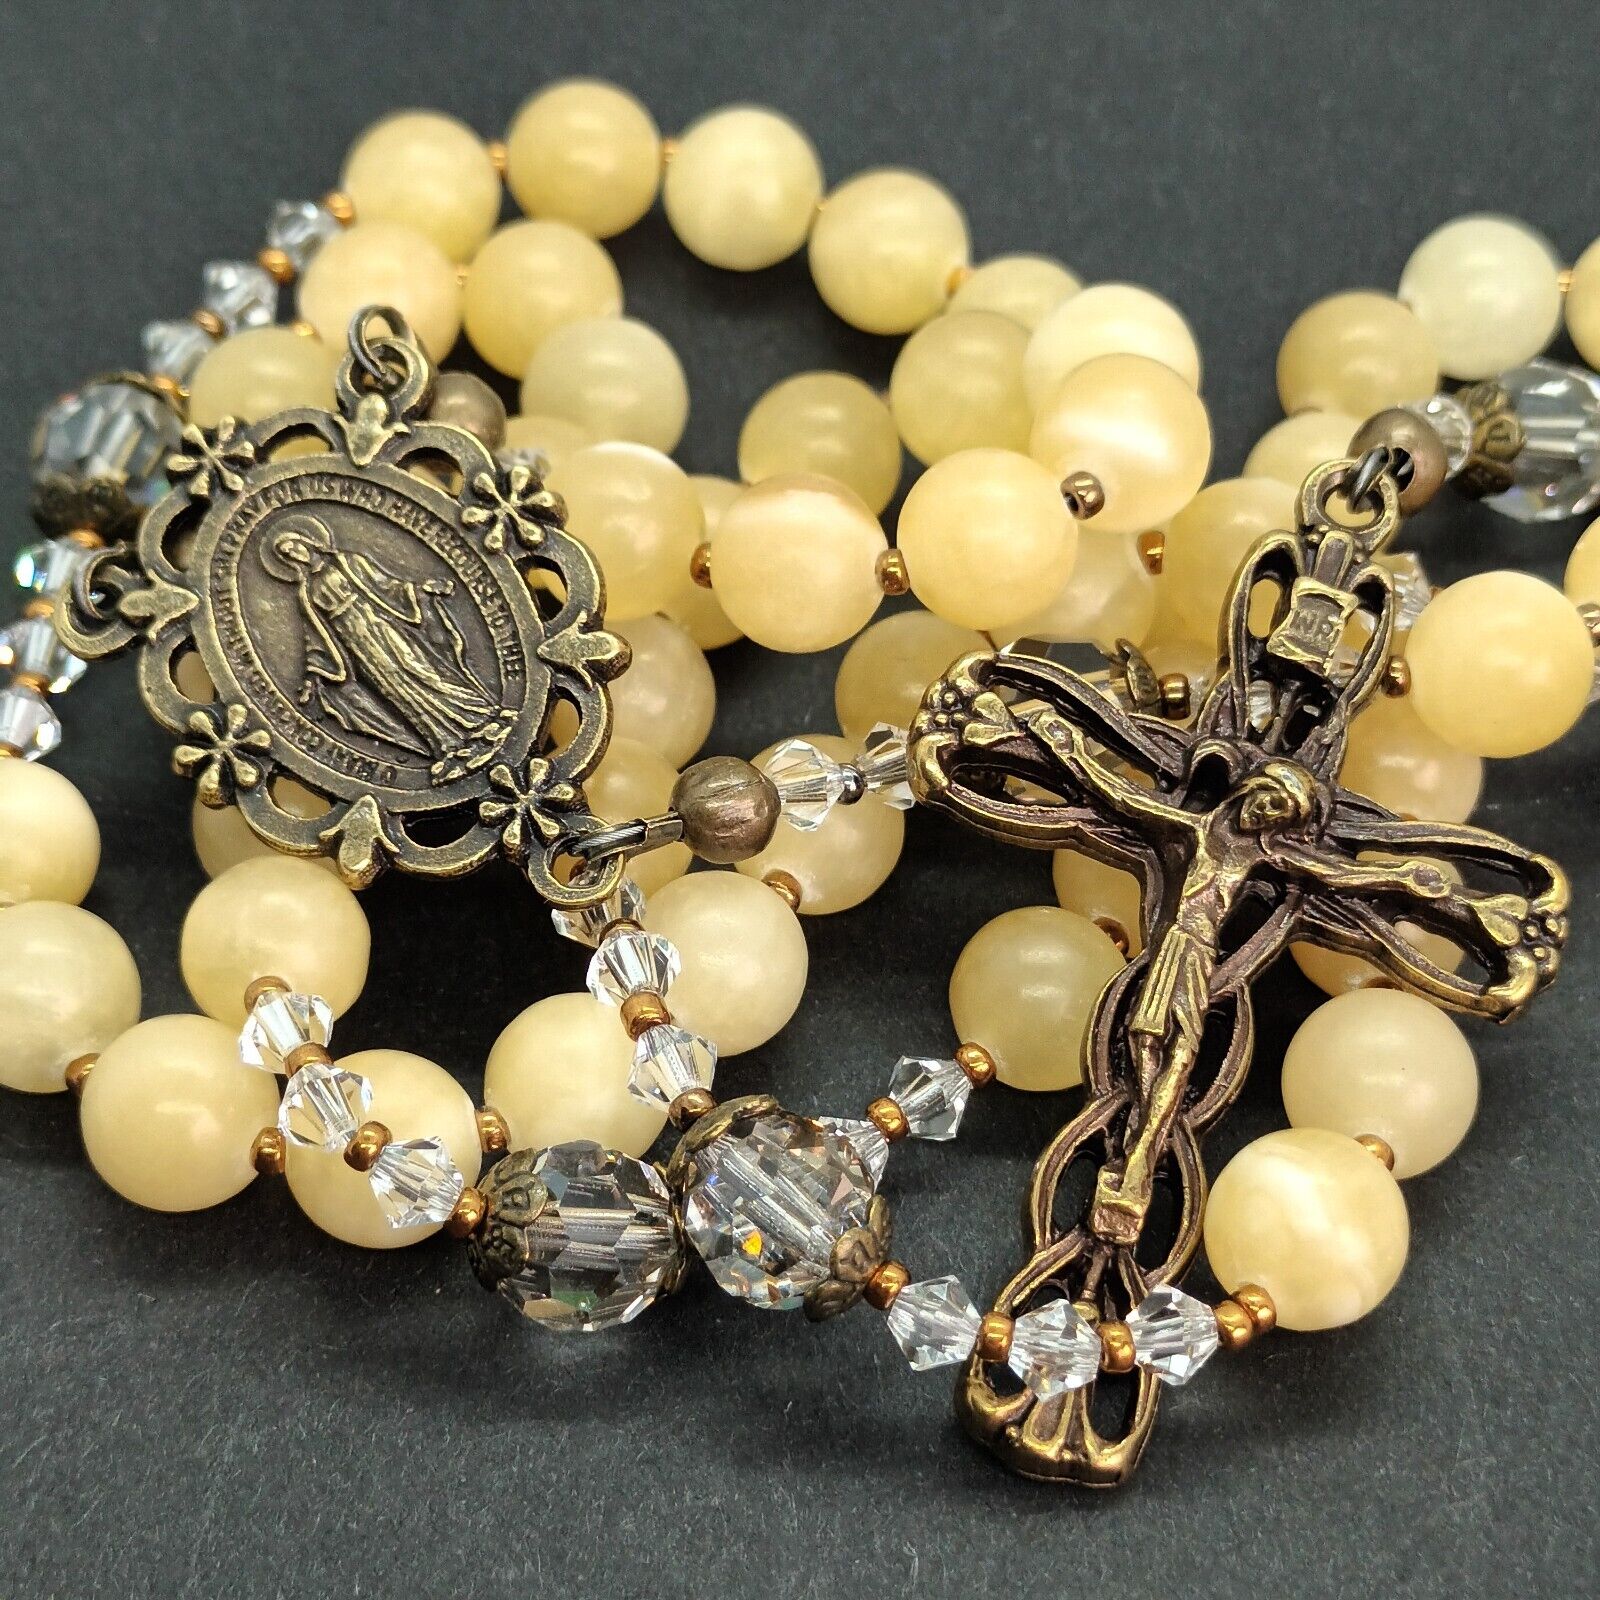 Handmade natural honey jade yellow rosary with Italian bronze crucifix and centr